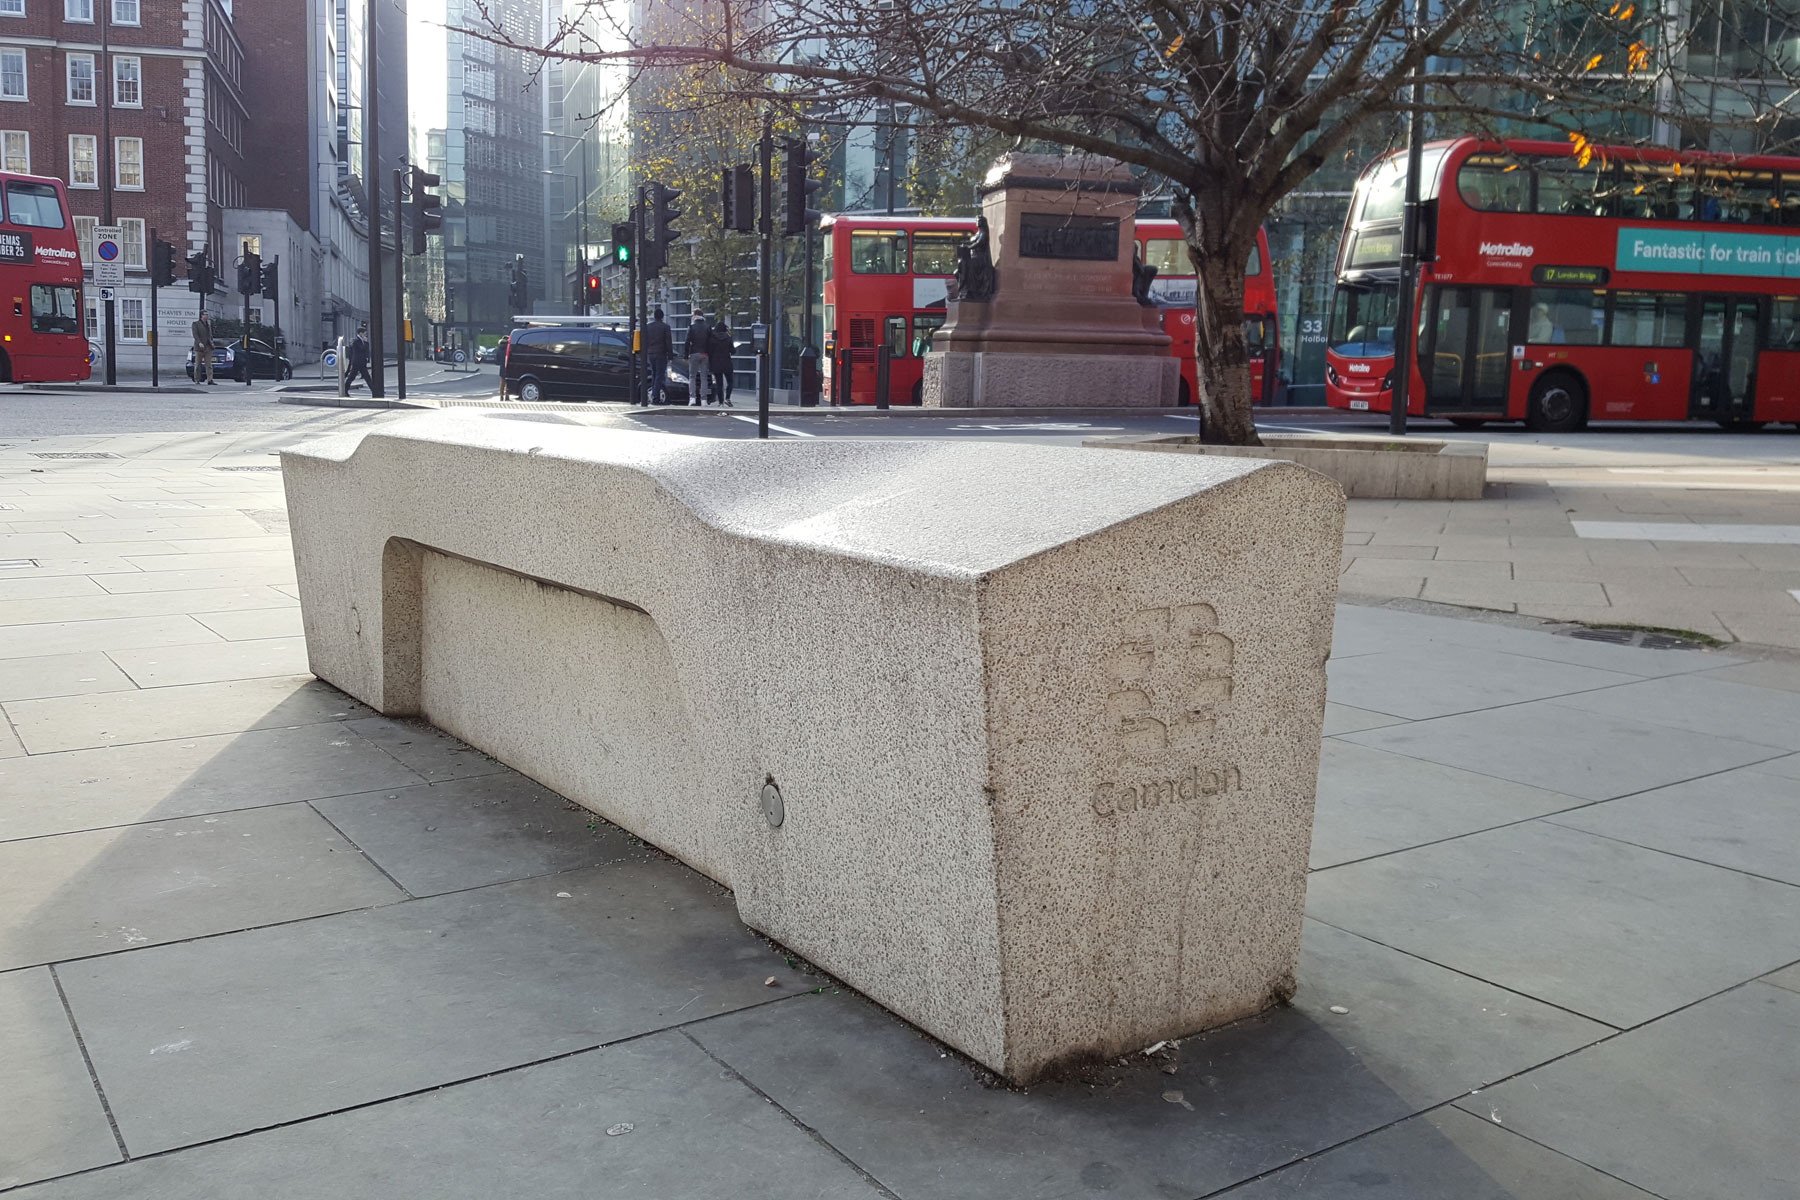 Camden bench in London